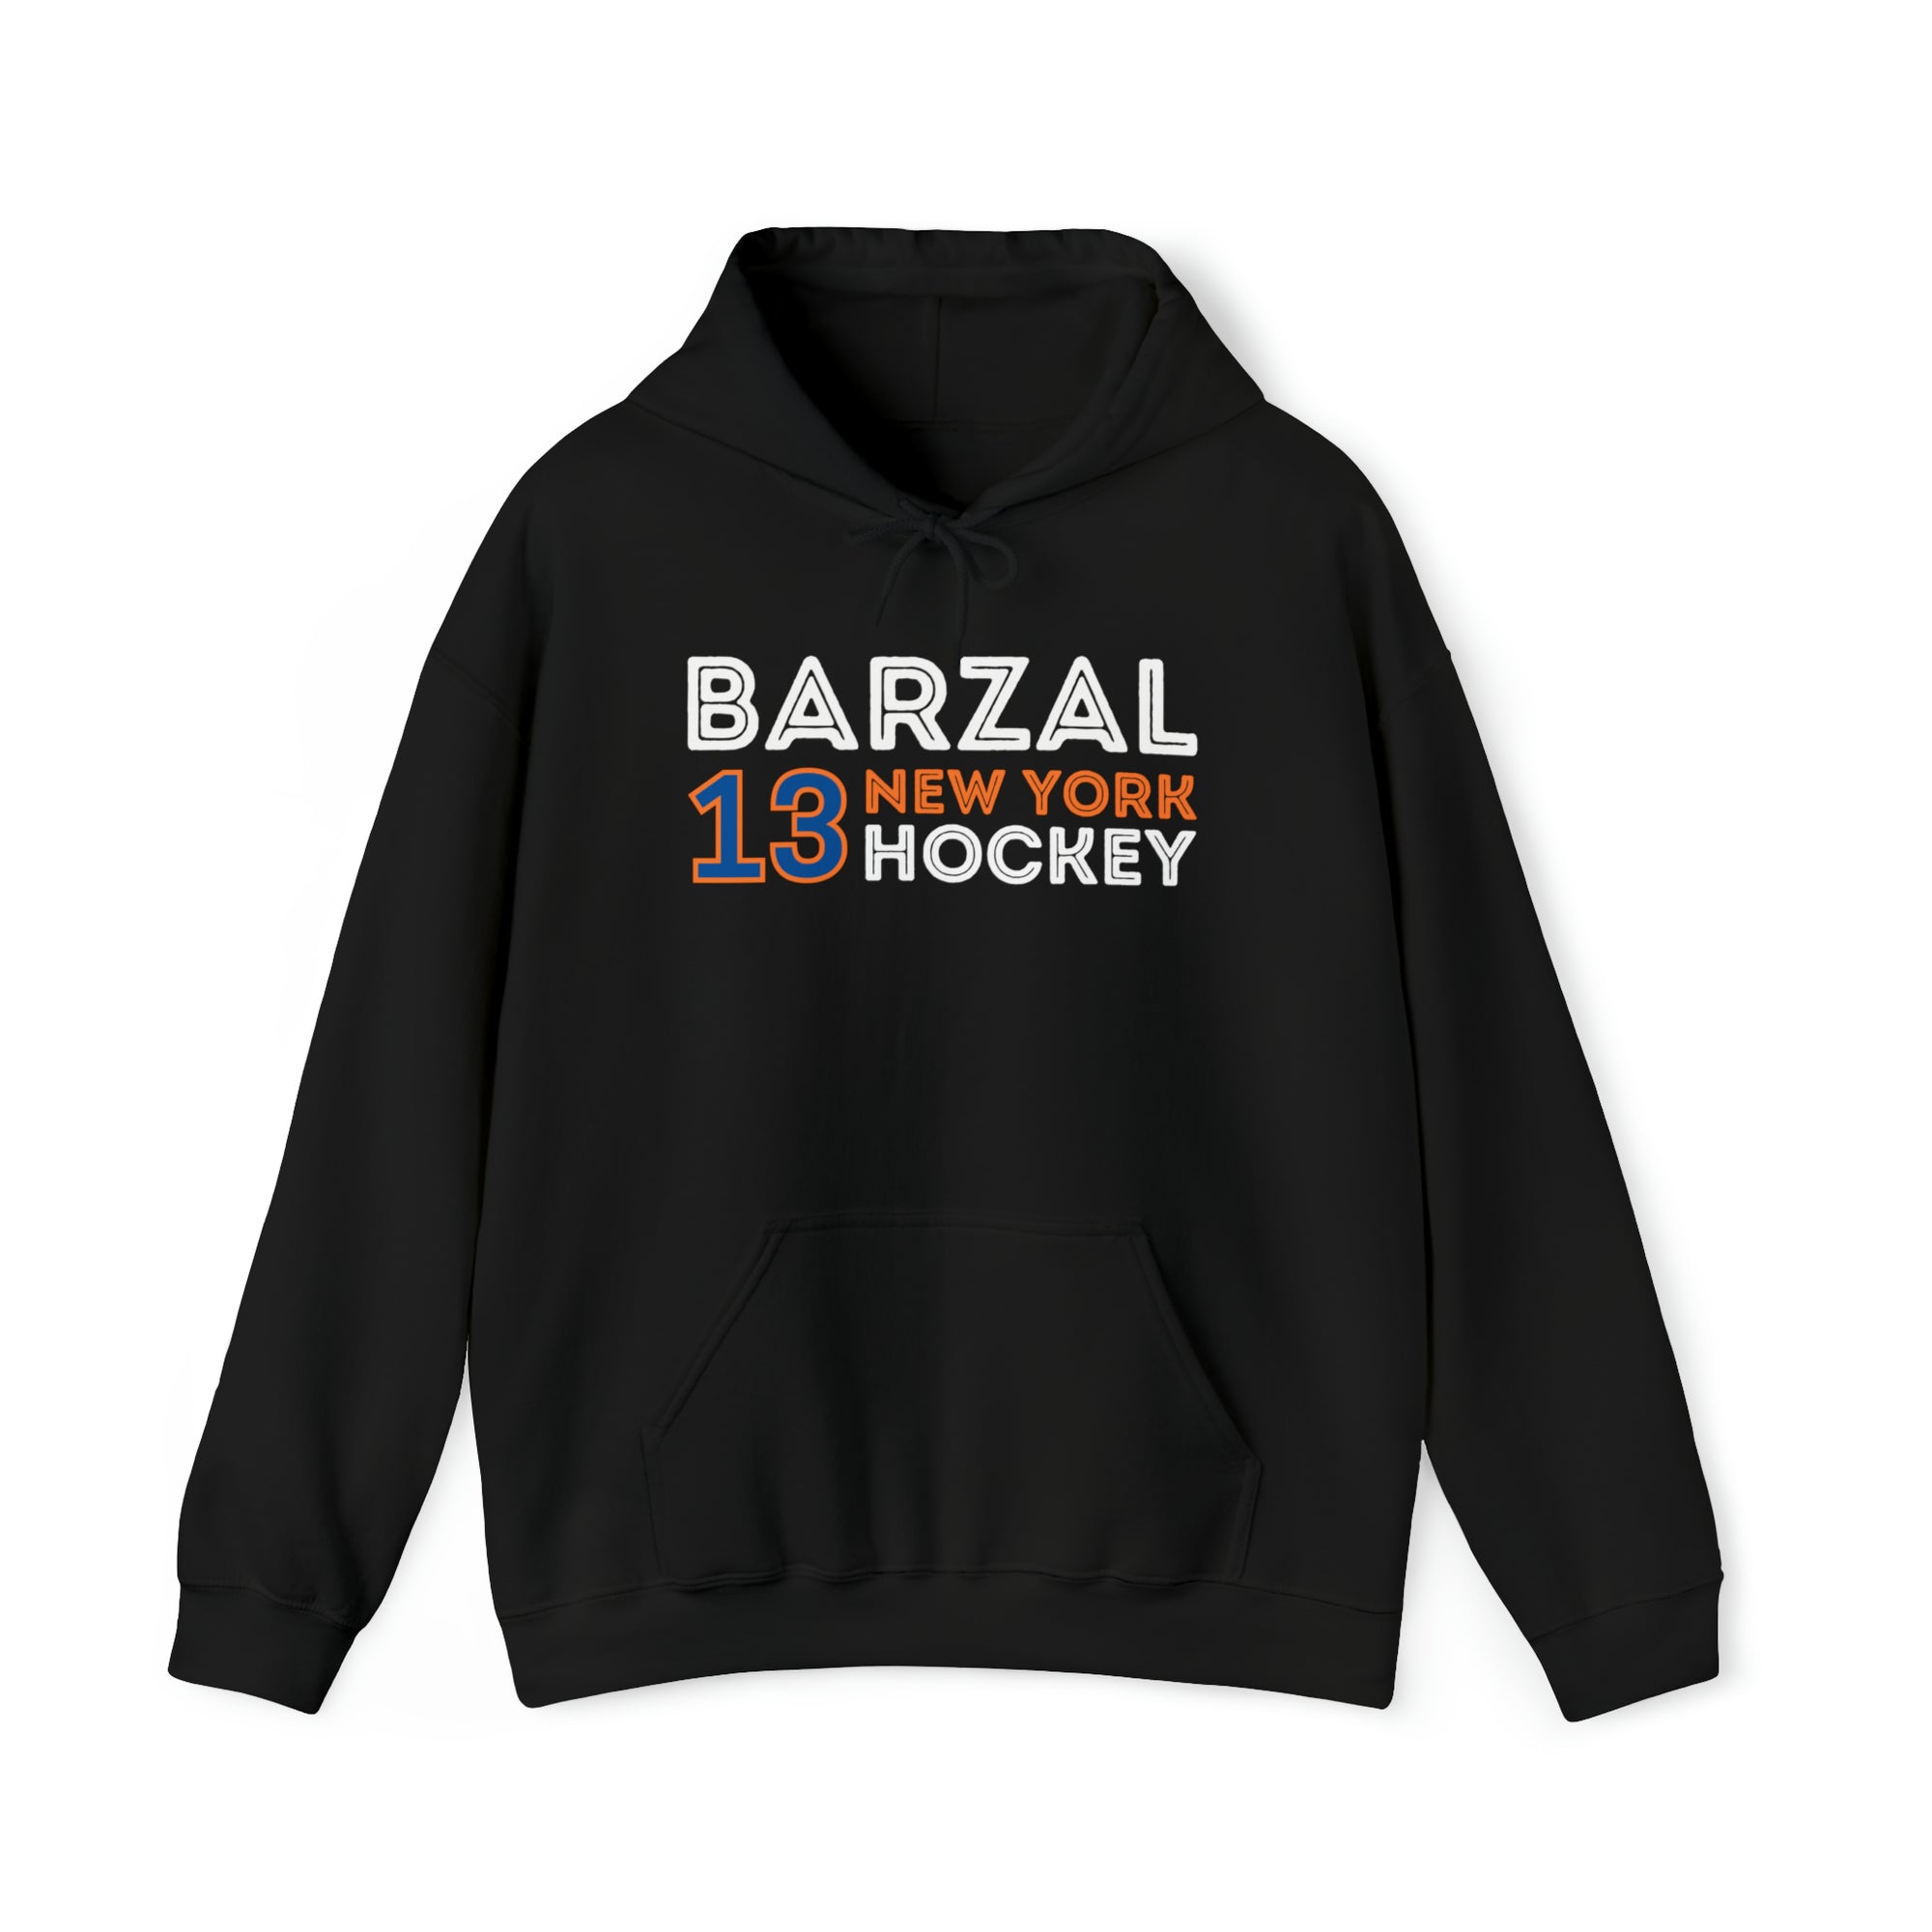 Barzal 13 New York Hockey Grafitti Wall Design Unisex Hooded Sweatshirt